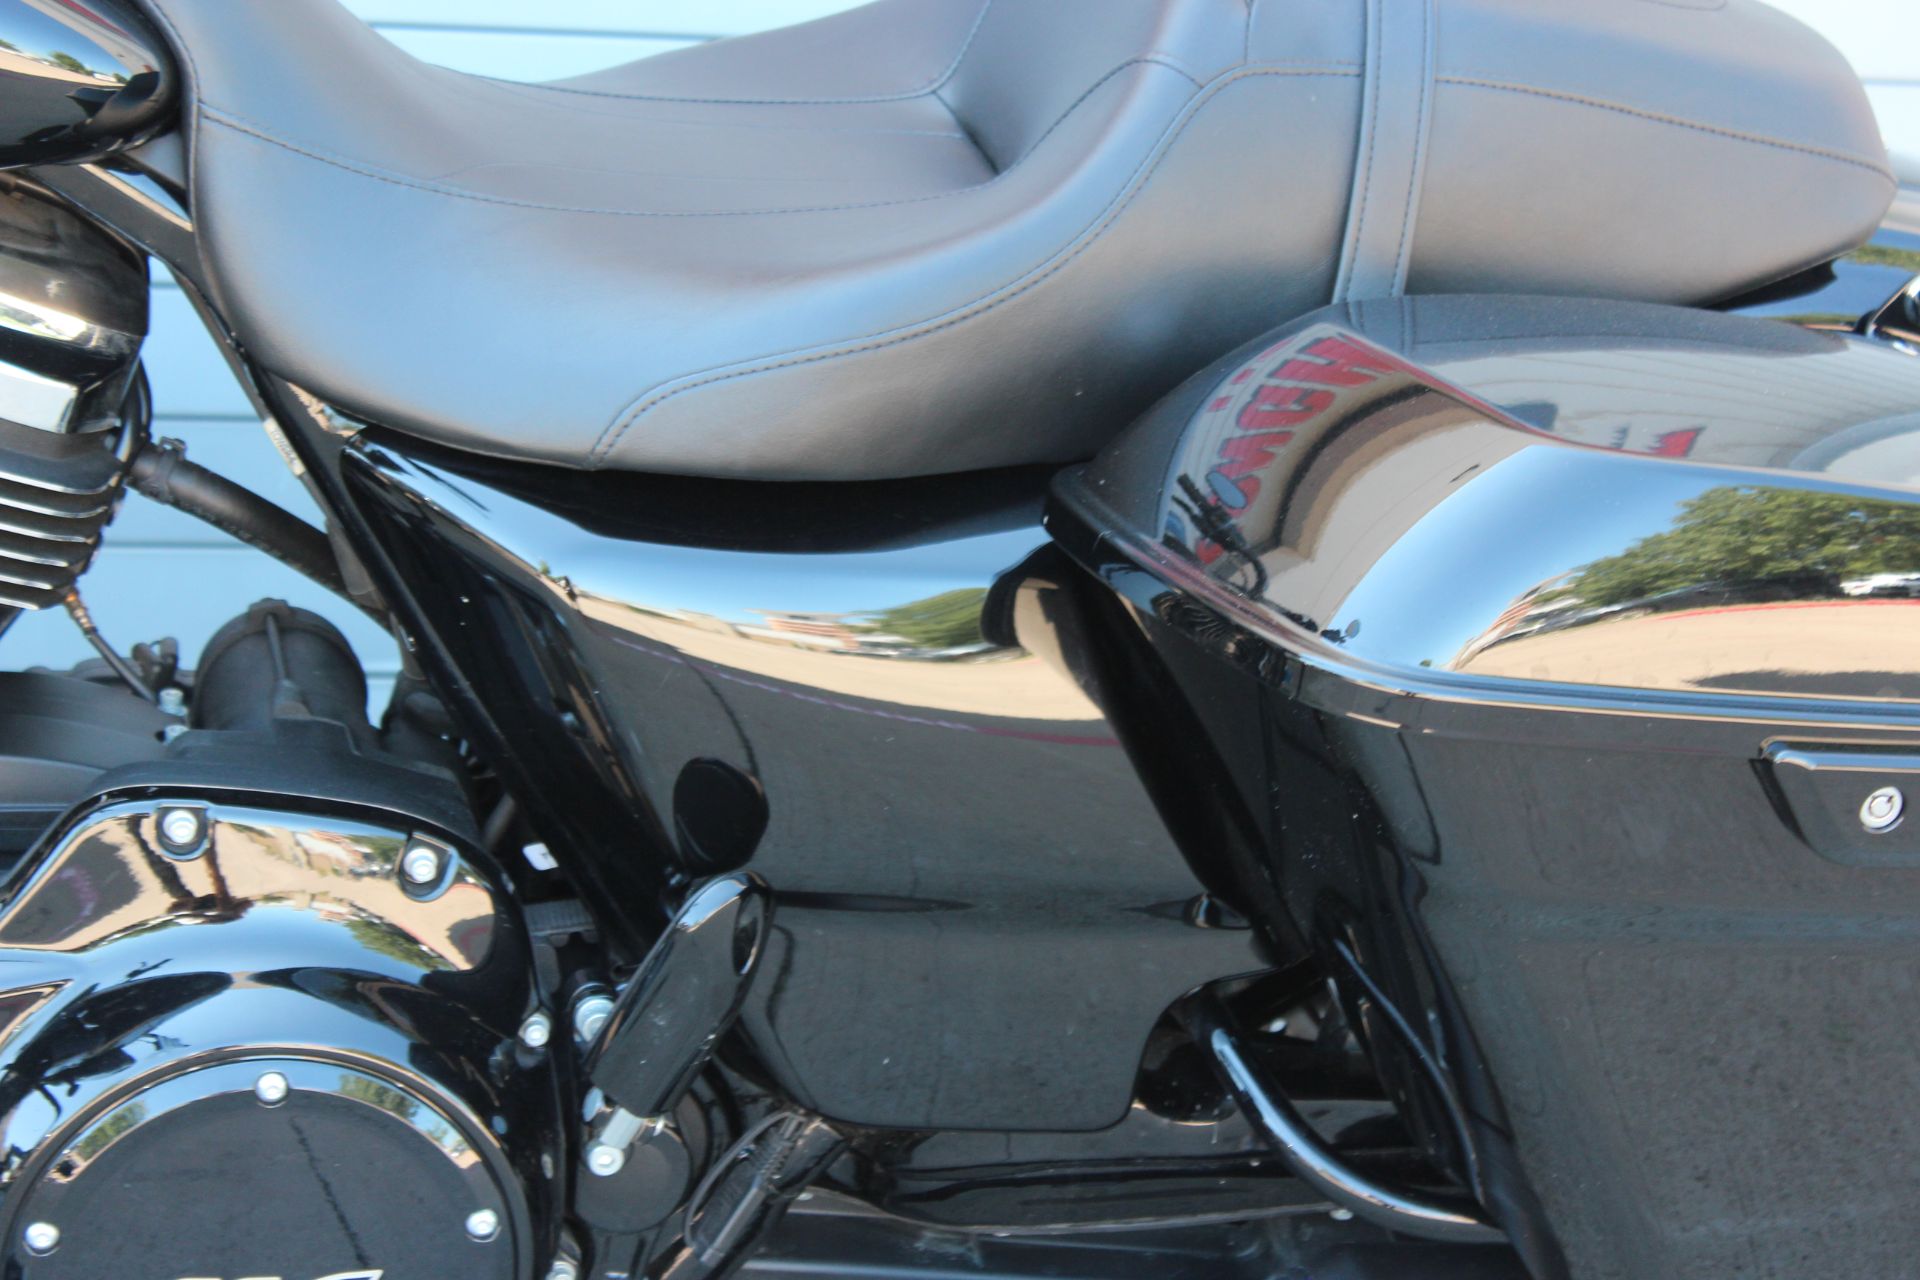 2020 Harley-Davidson Road Glide® Special in Grand Prairie, Texas - Photo 19